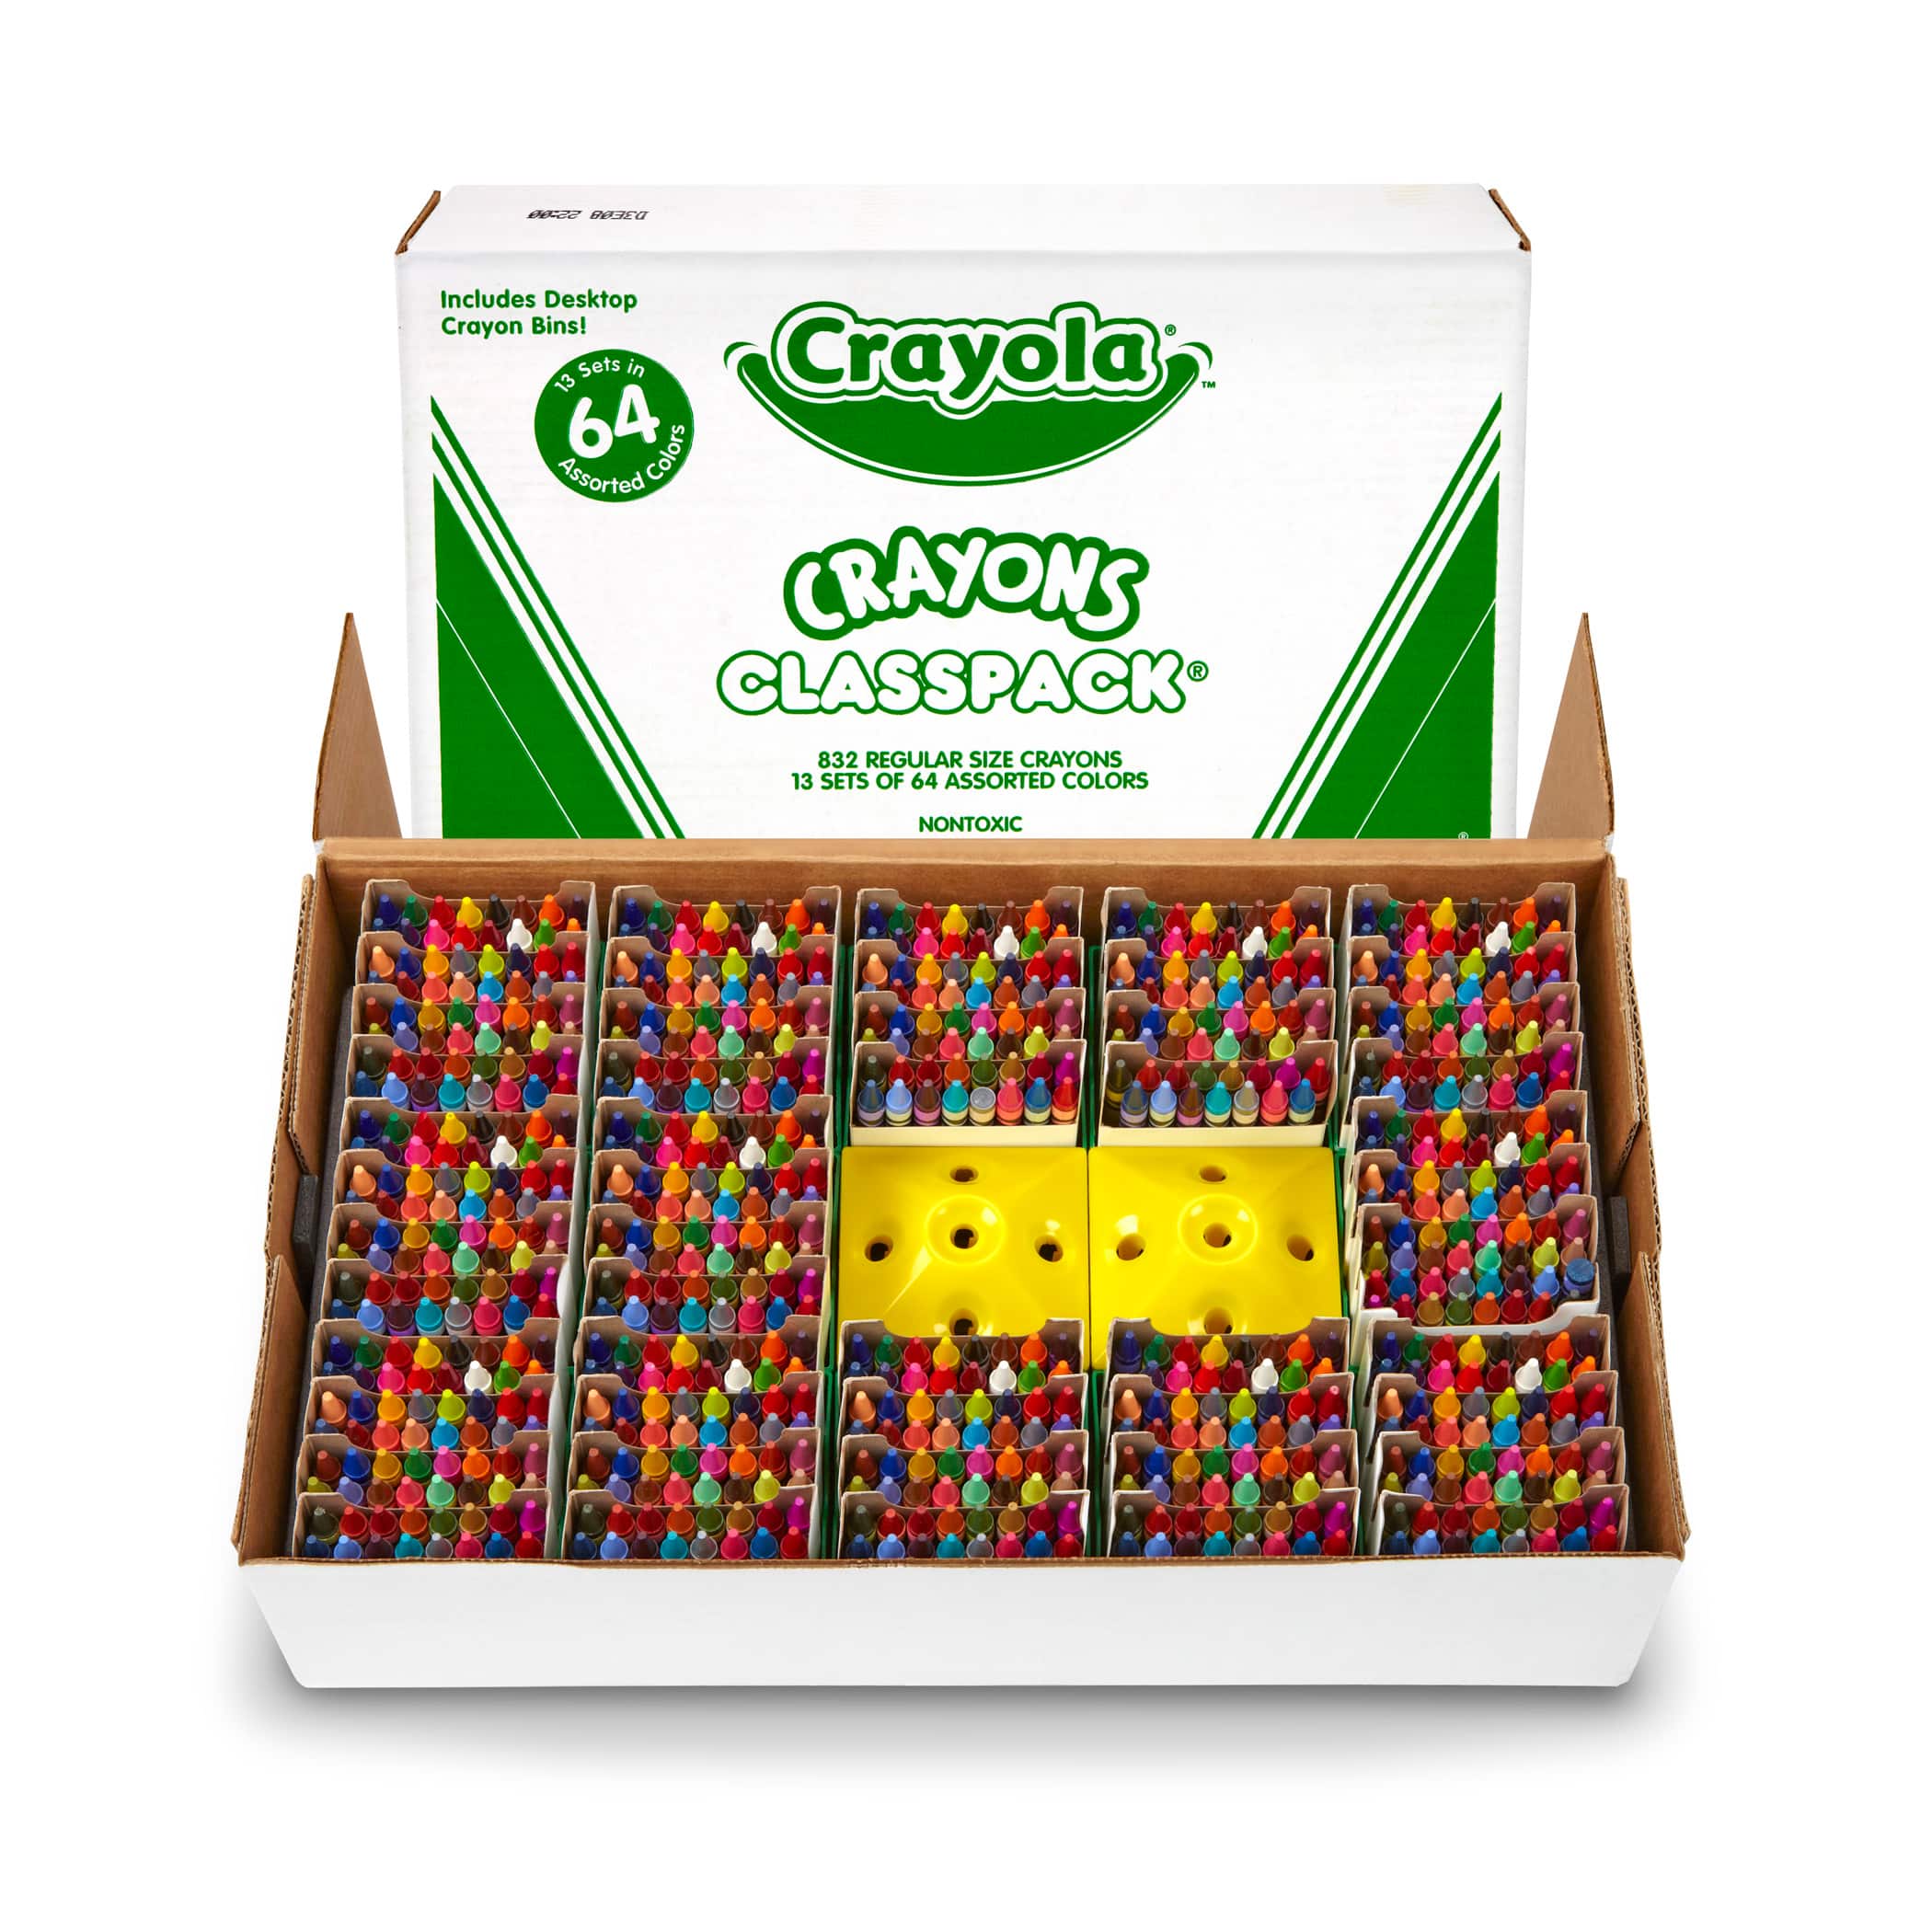 6 Packs: 832 ct. (4,992 total) Crayola&#xAE; 64 Color Crayon Classpack&#xAE;